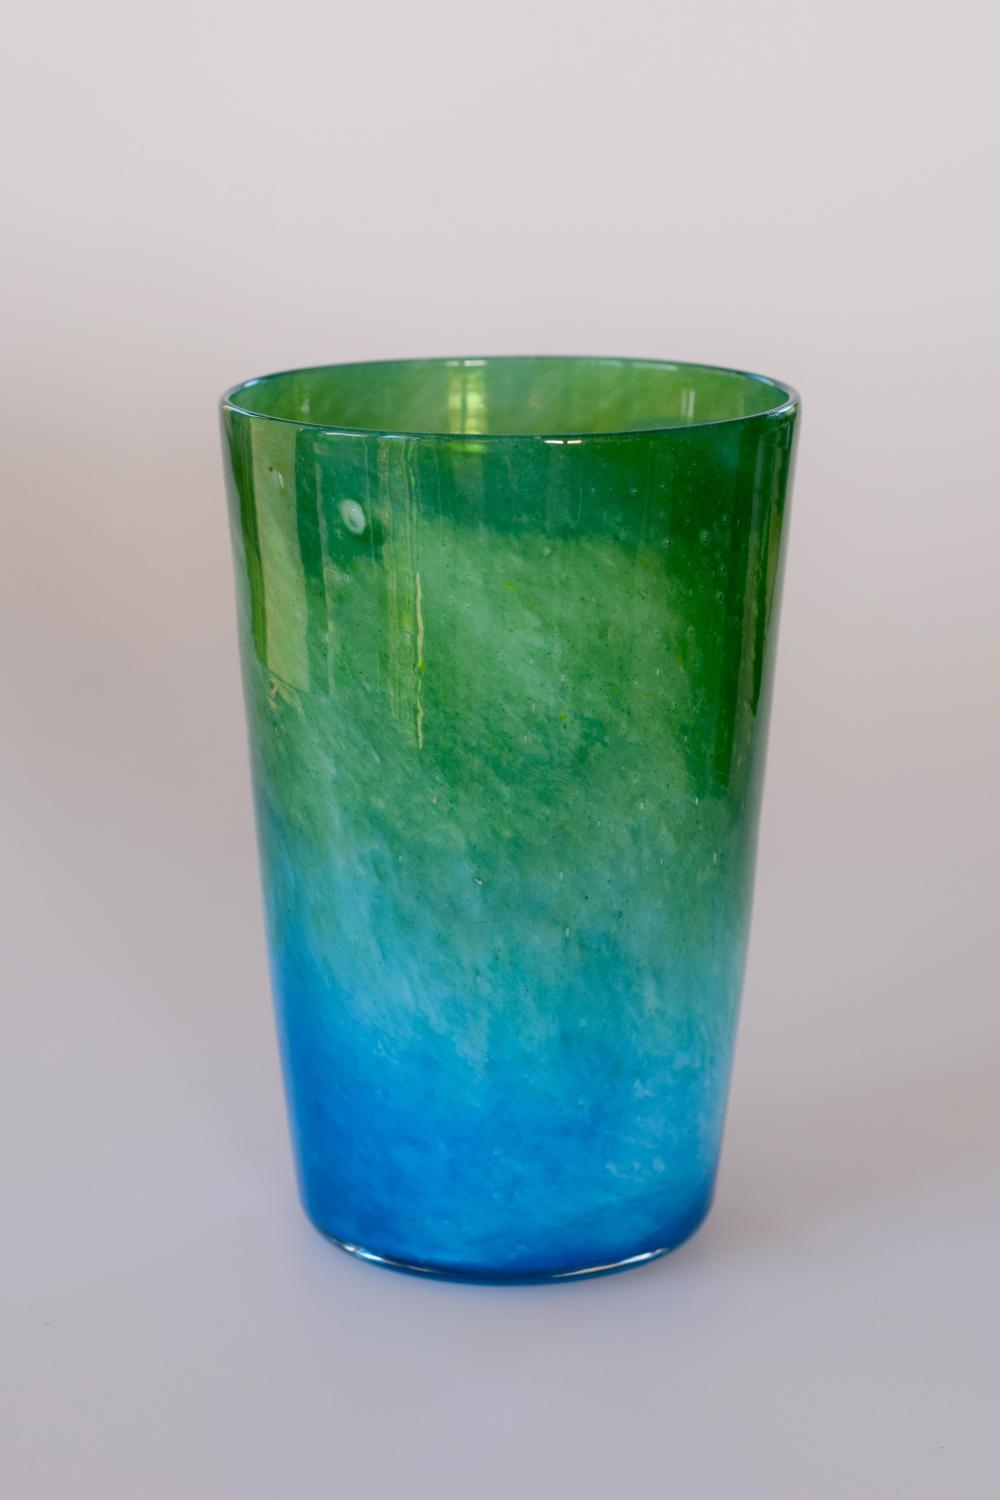 Green/blue cloudy tumbler vase, Whitefriars